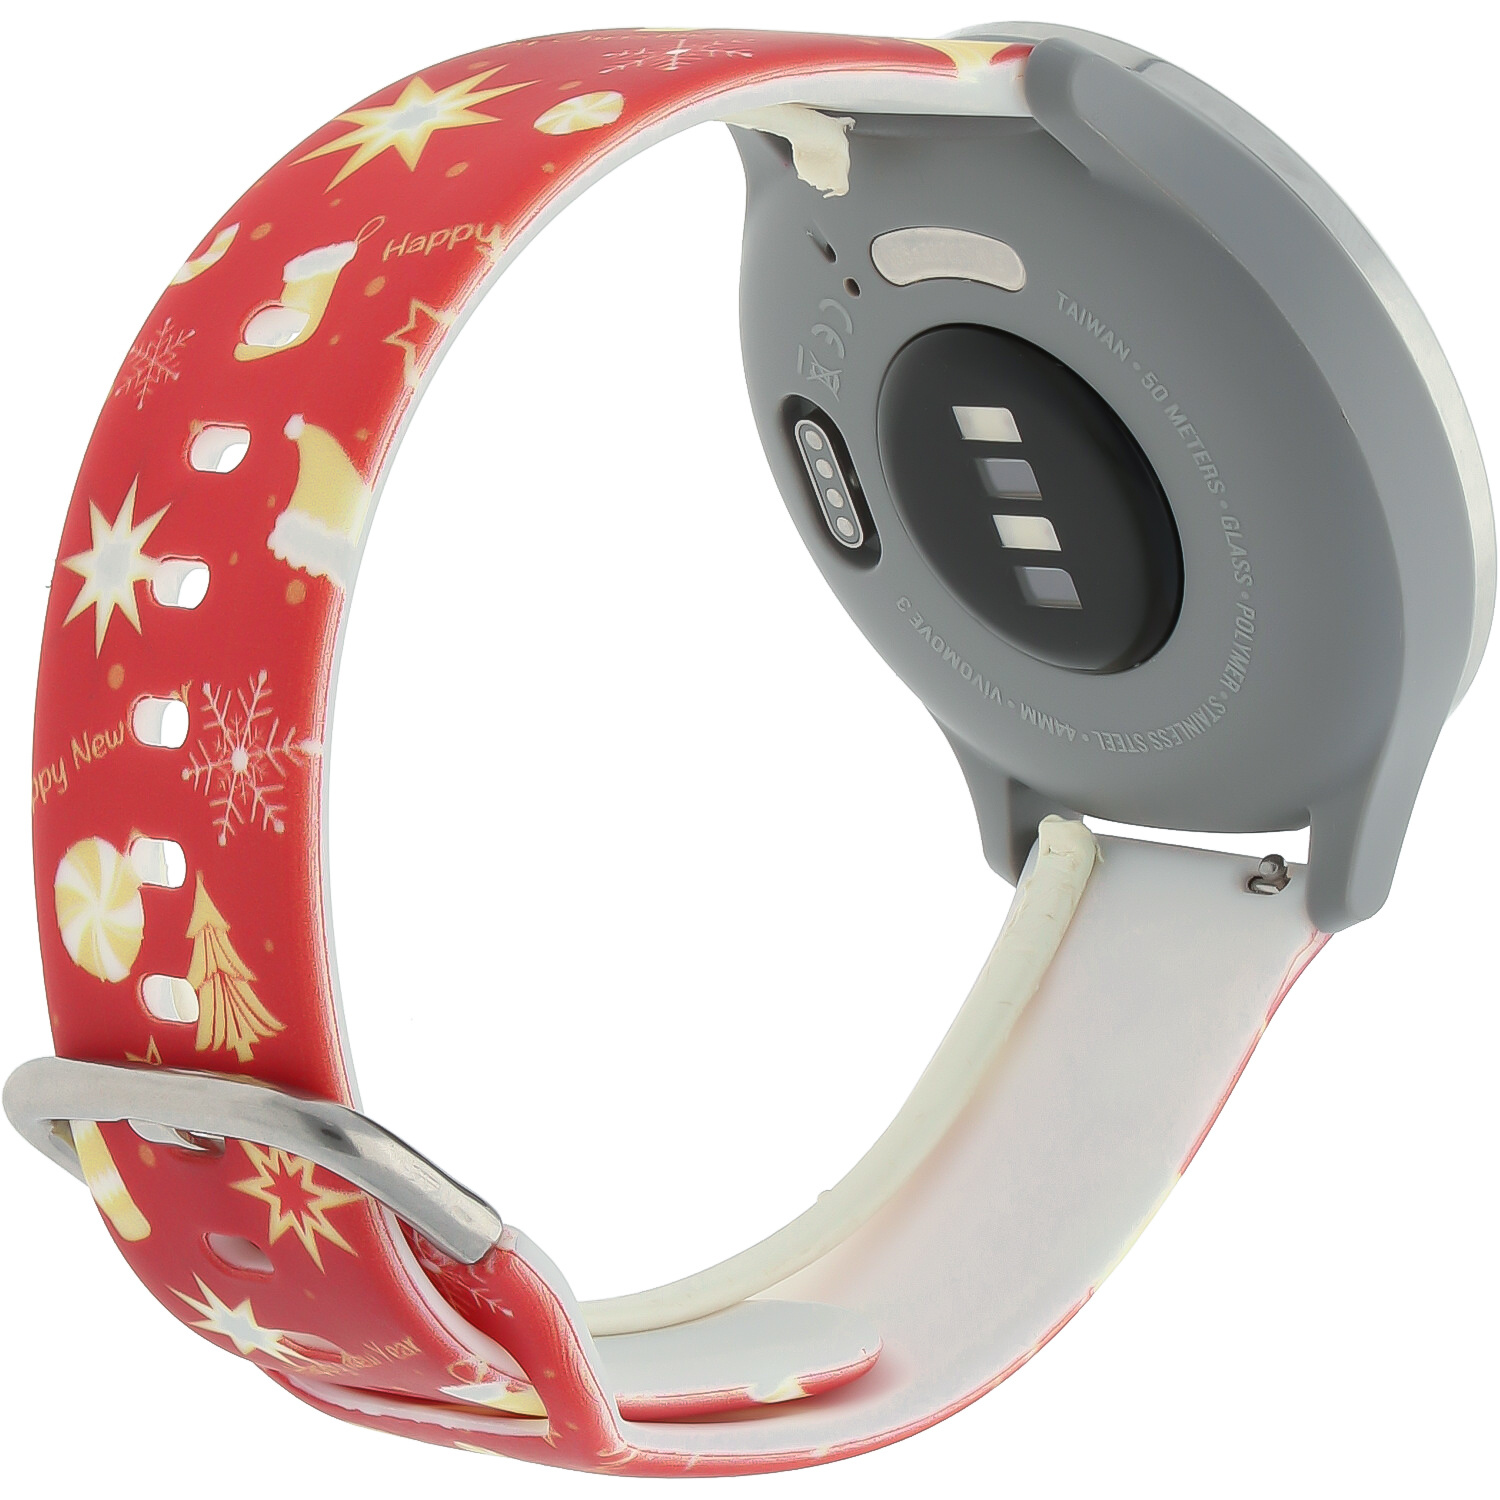 Huawei Watch druck Sportarmband - Weihnachten rot